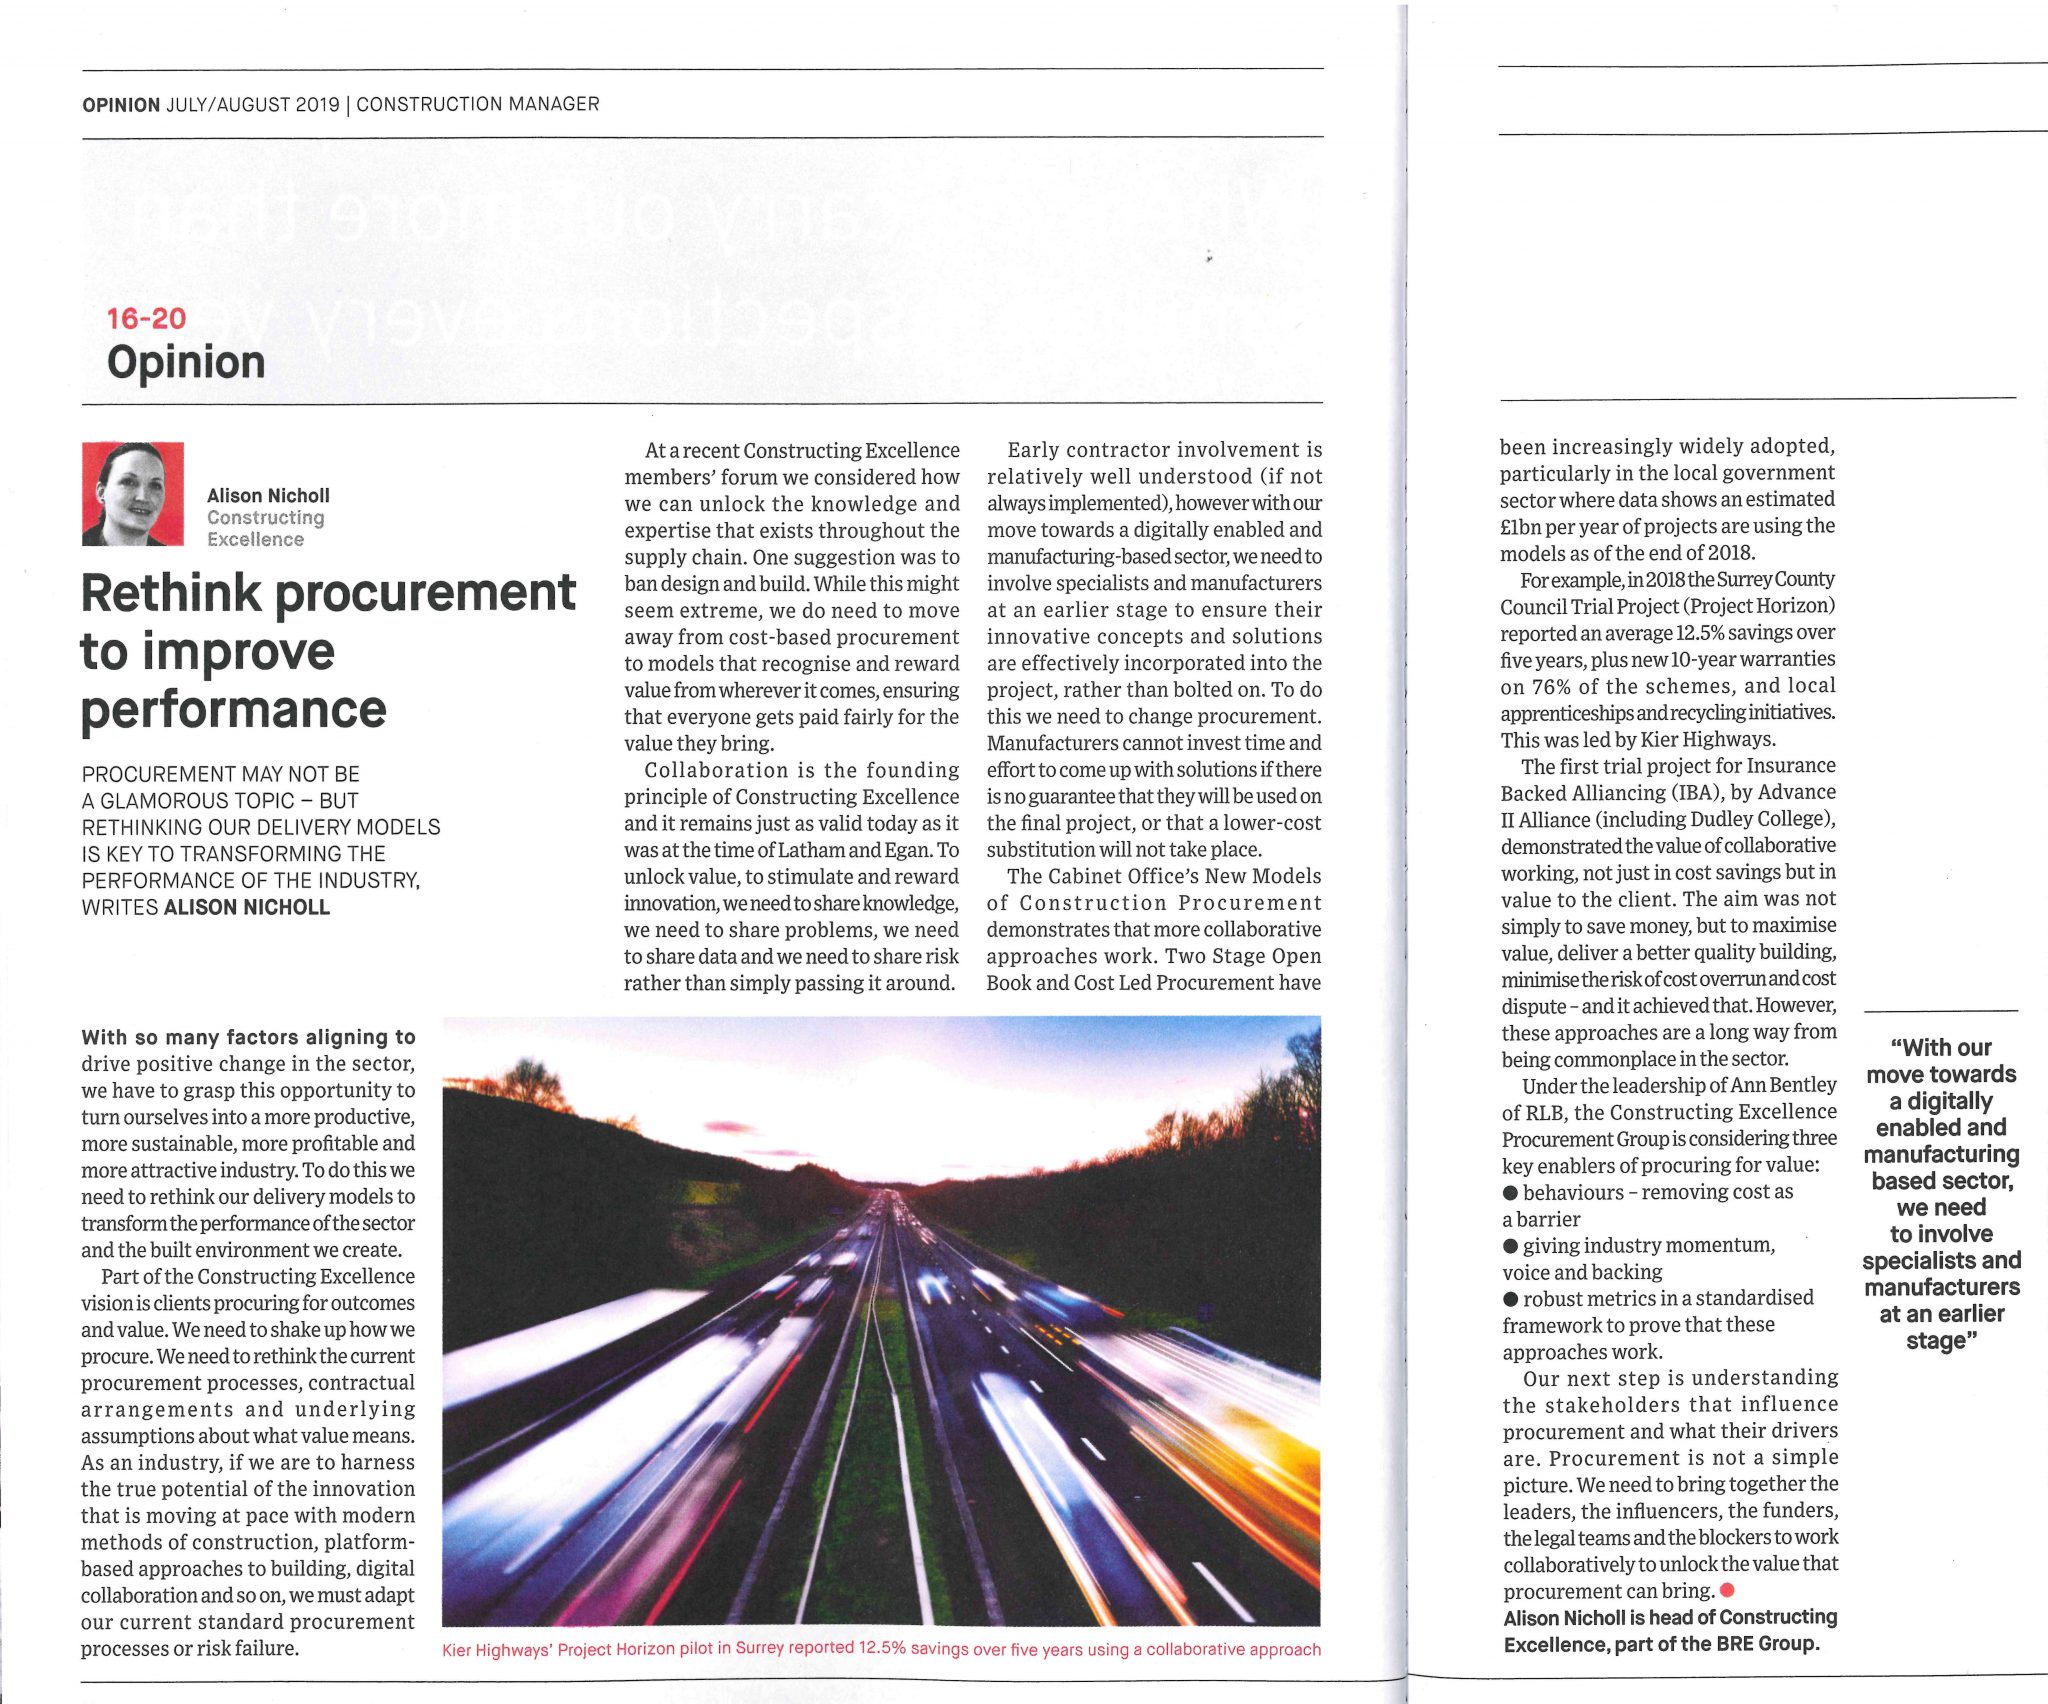 Rethink procurement to improve performance